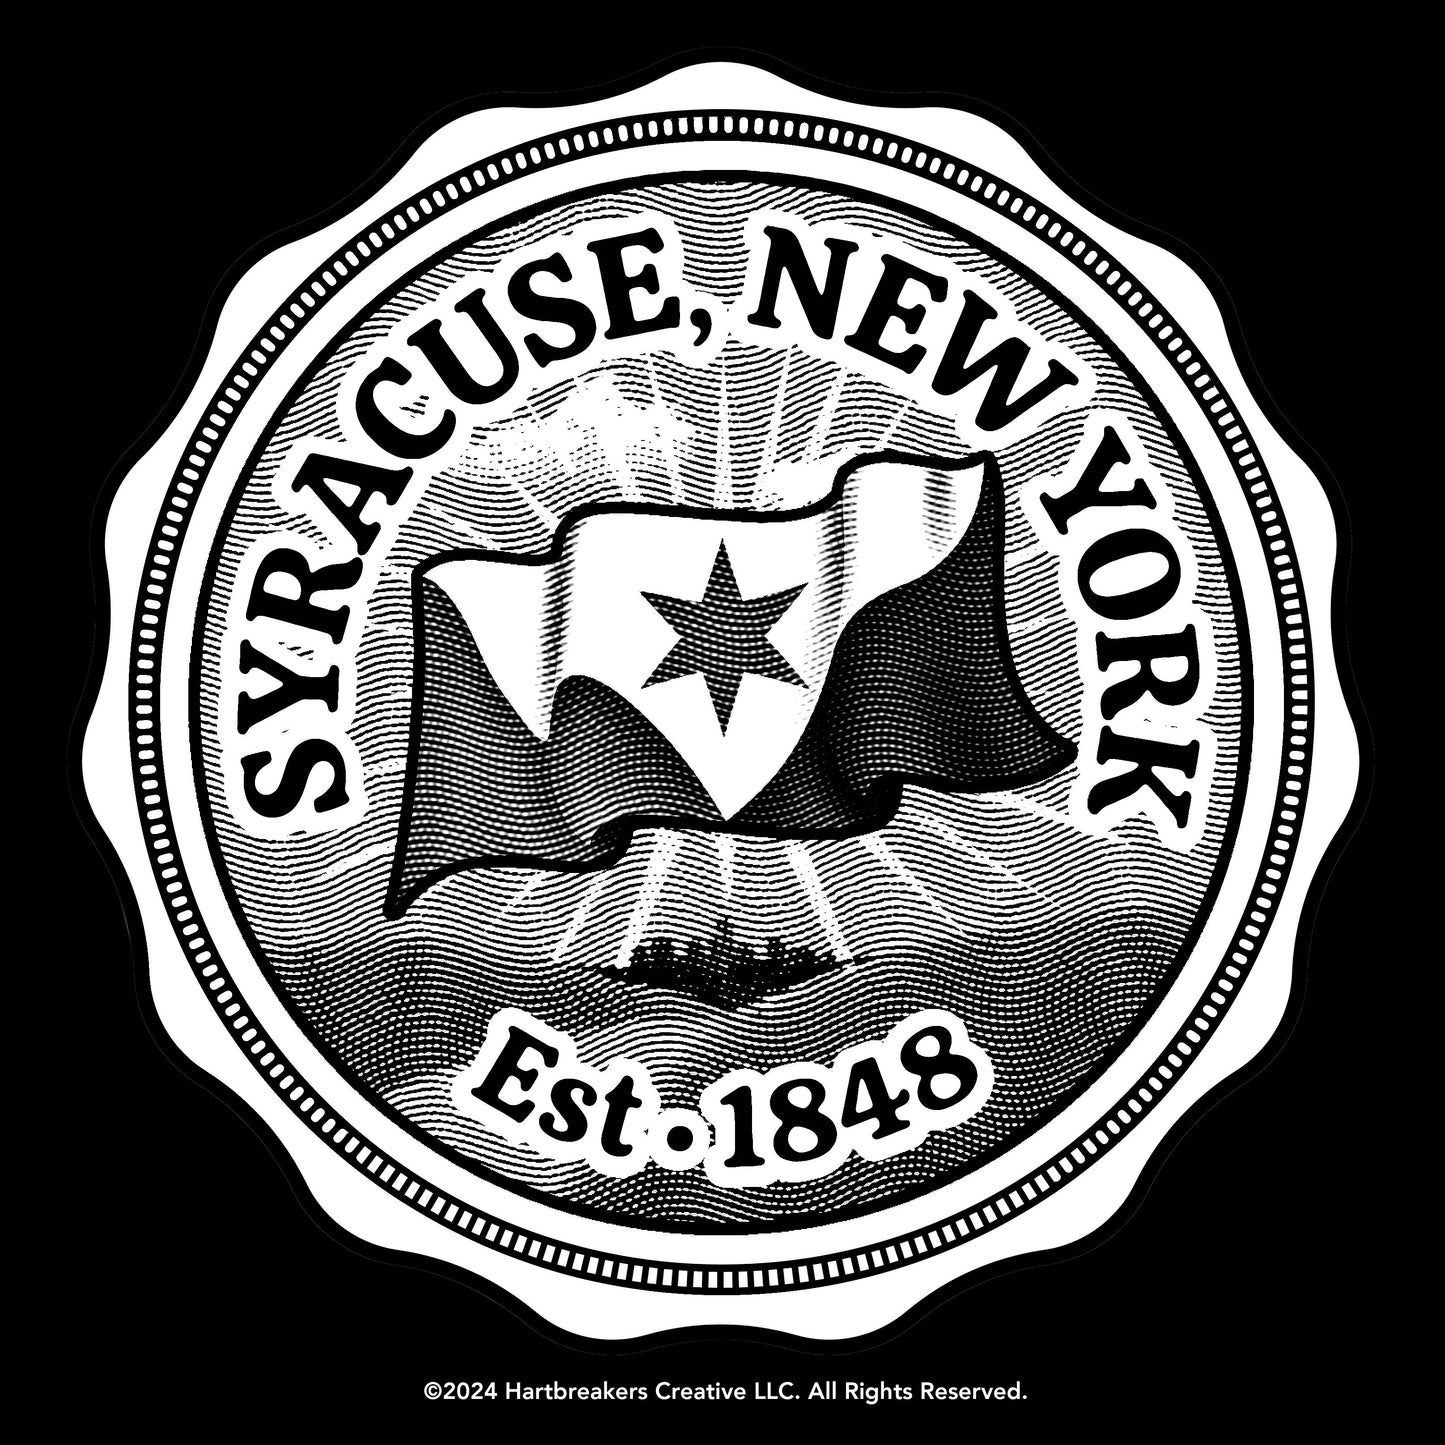 Engraved Crest Syracuse T-shirt